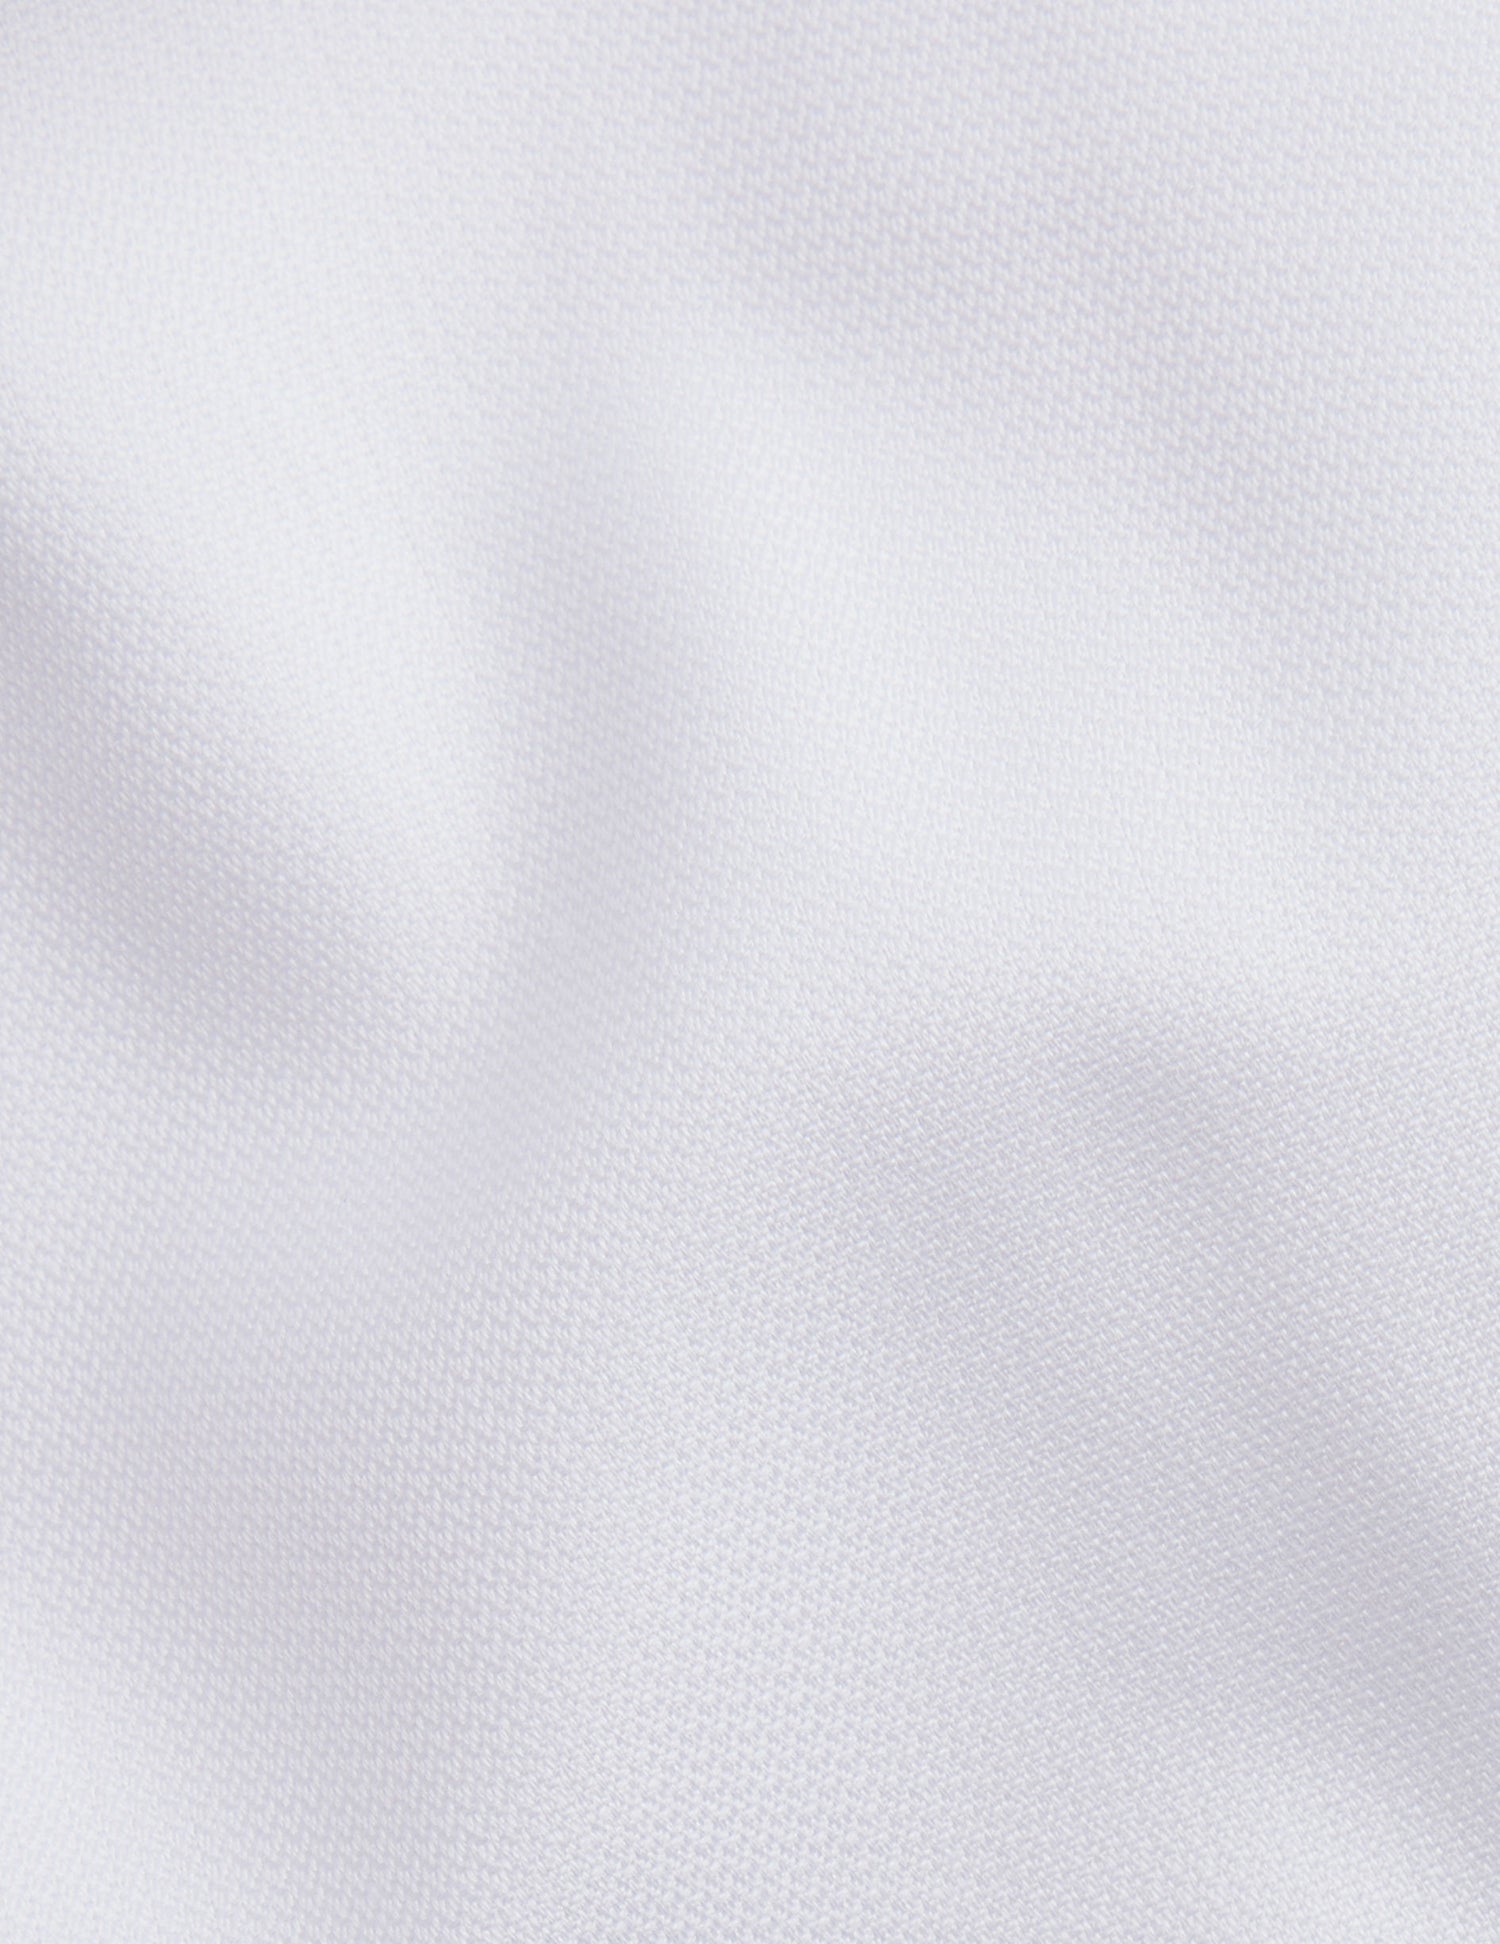 Classic white shirt - Shaped - Figaret Collar#2